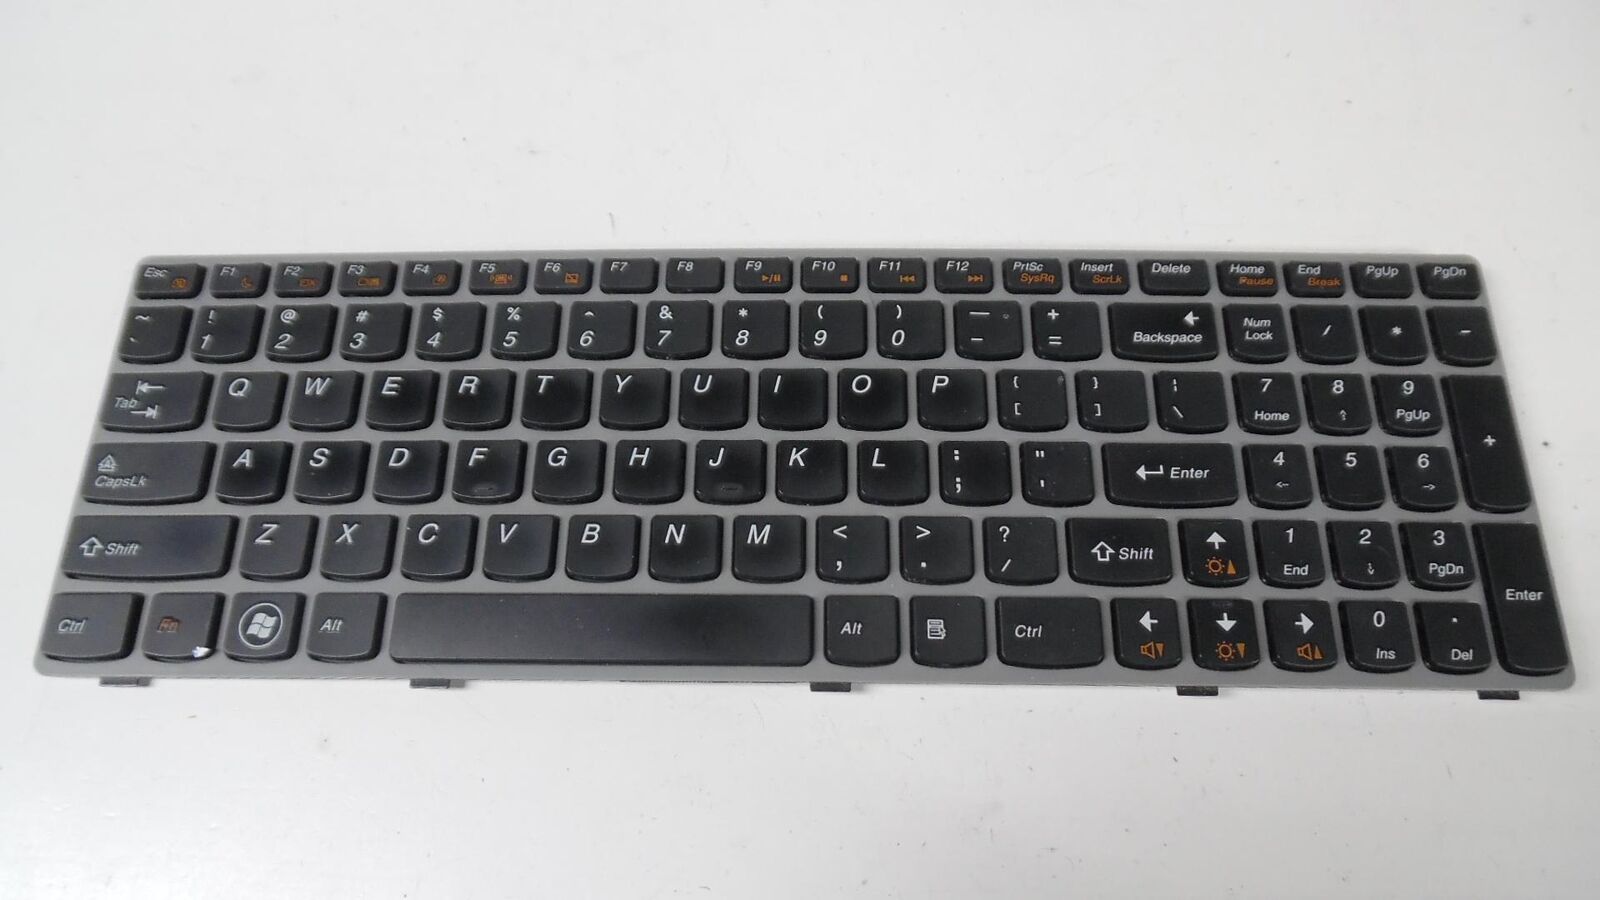 OEm Lenovo Z560 - Black US QWERTY Keyboard - 25-010793 - Tested